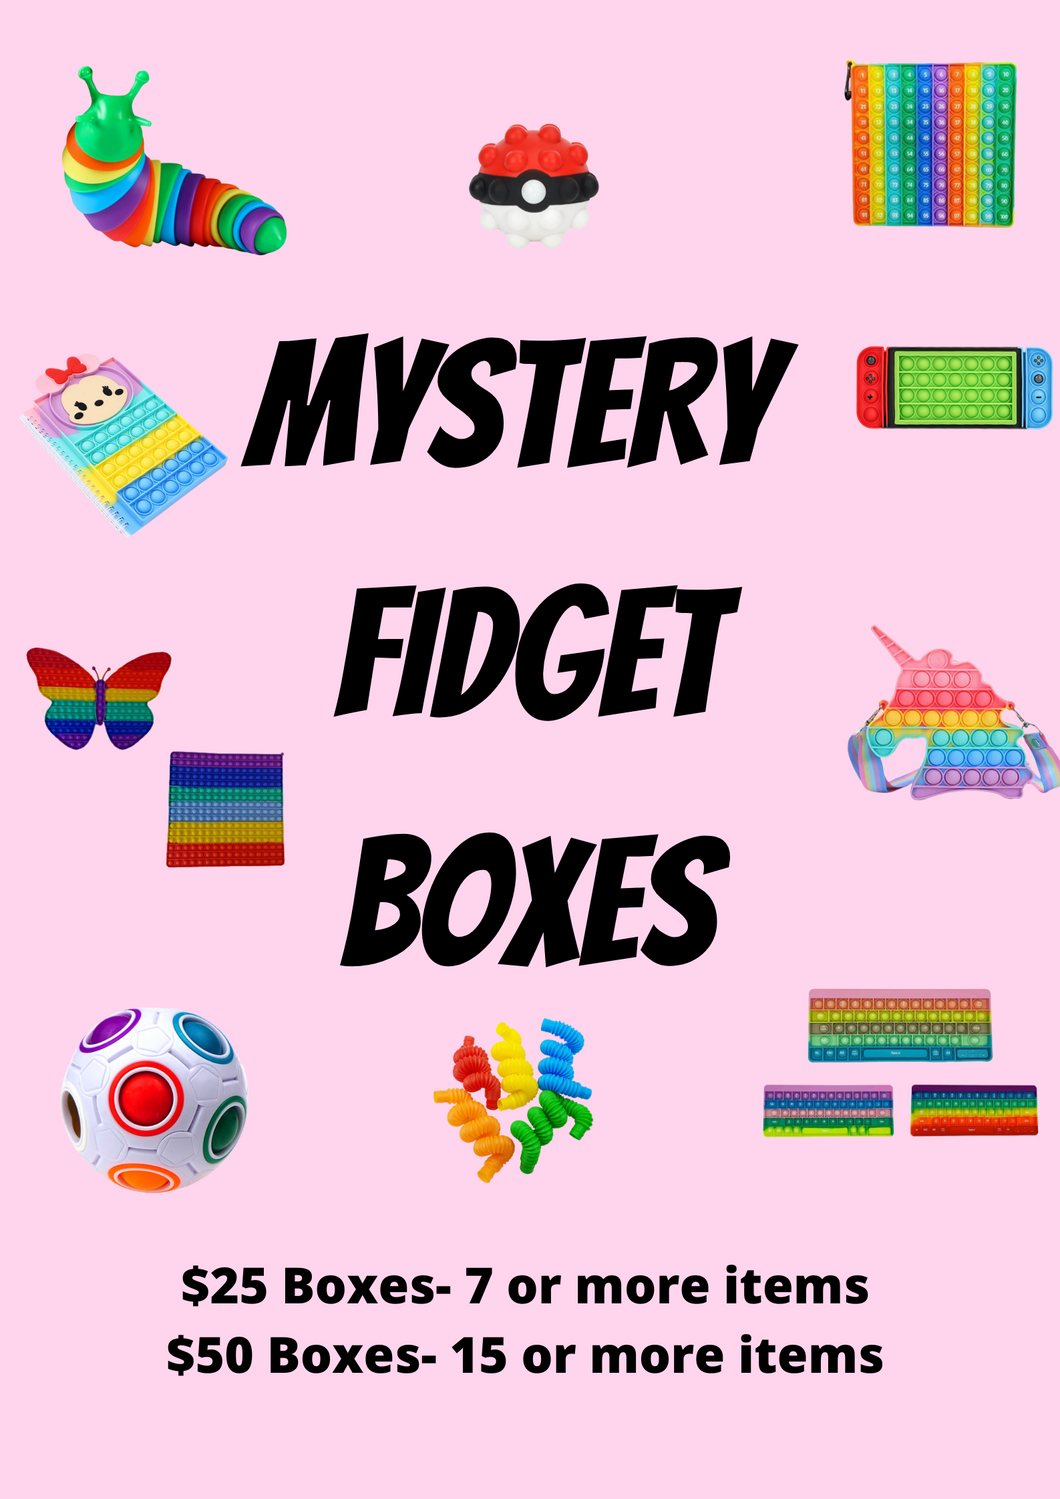 Mystery Fidget Boxes